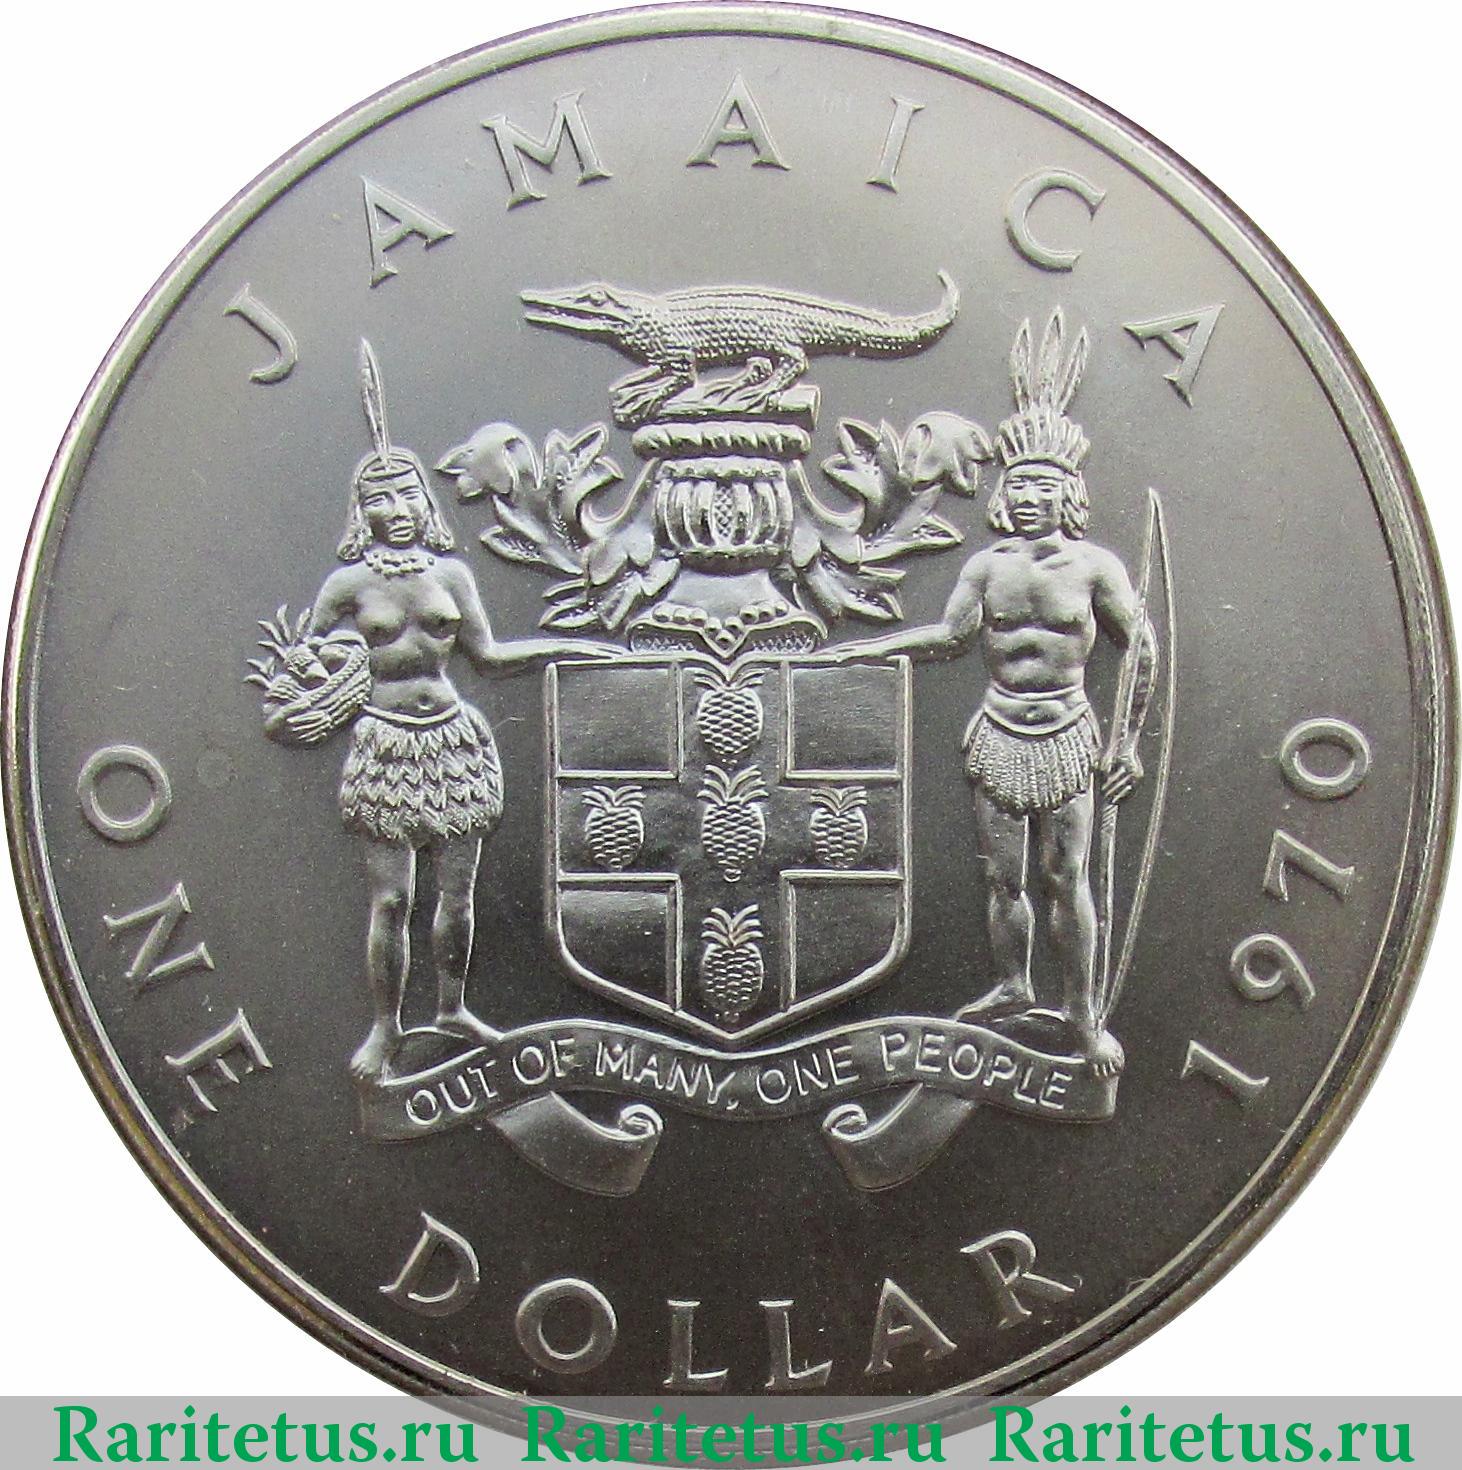 Ямайский доллар. Аверс